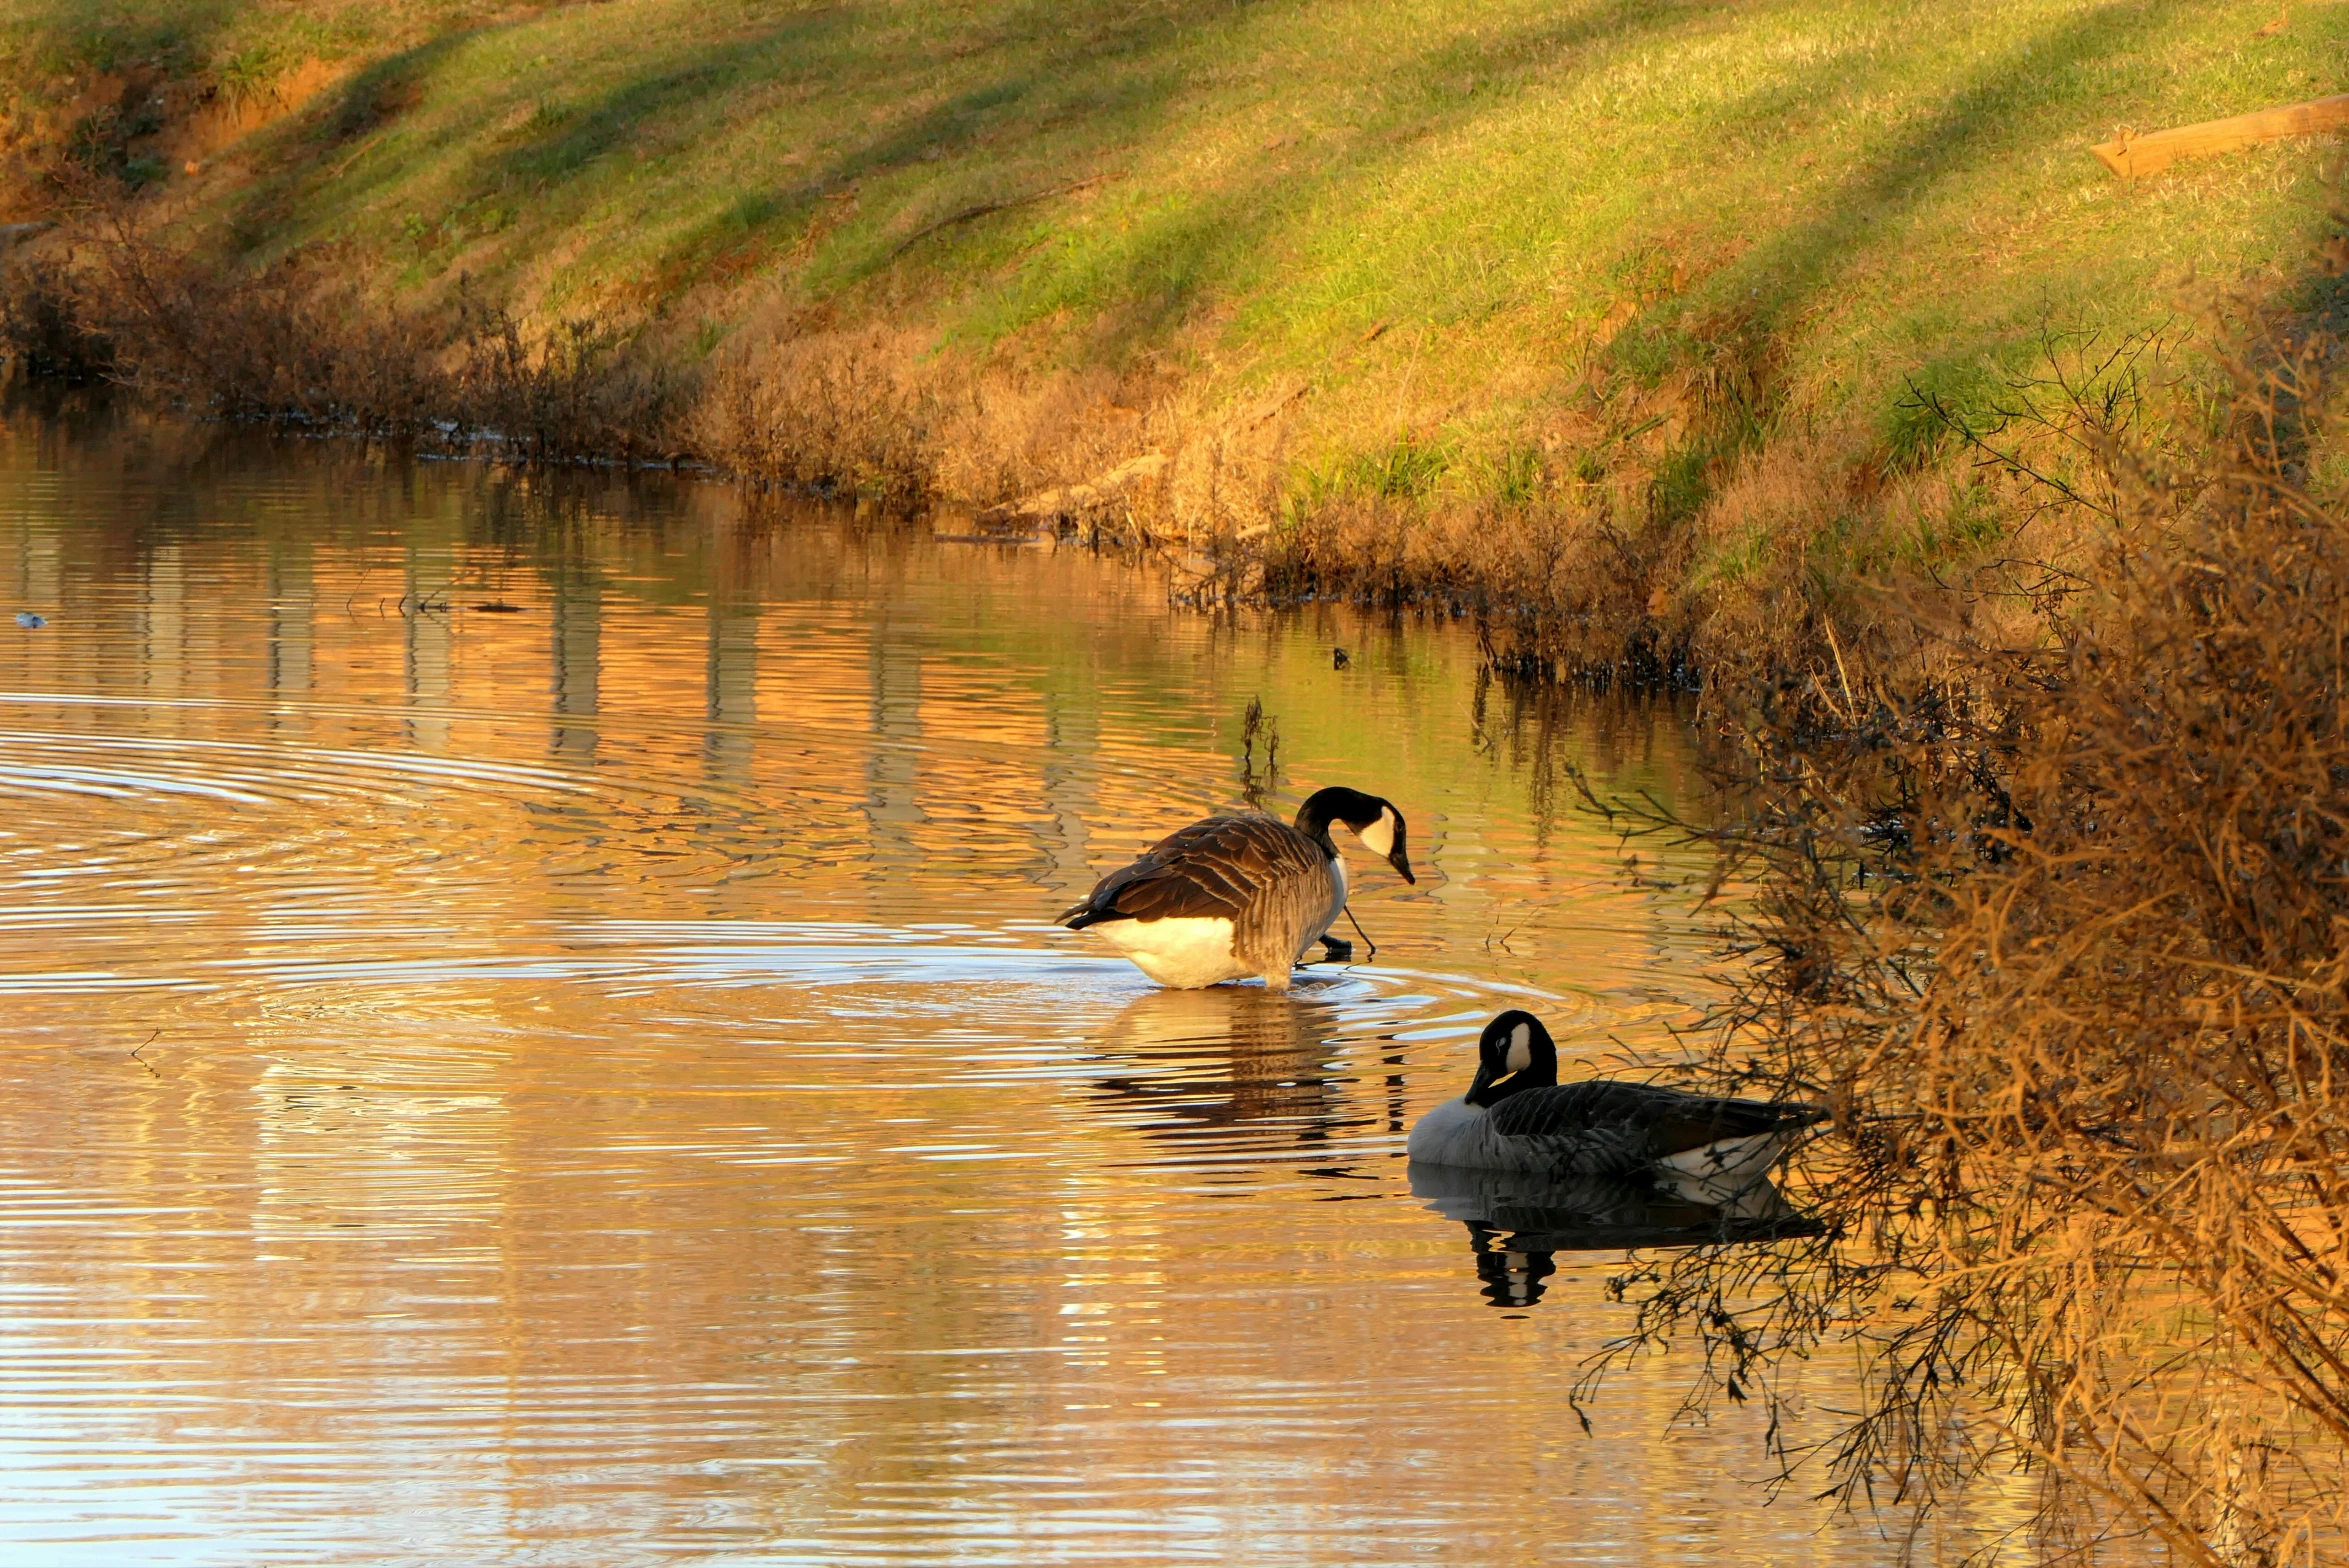 two ducks swim on the calm lake